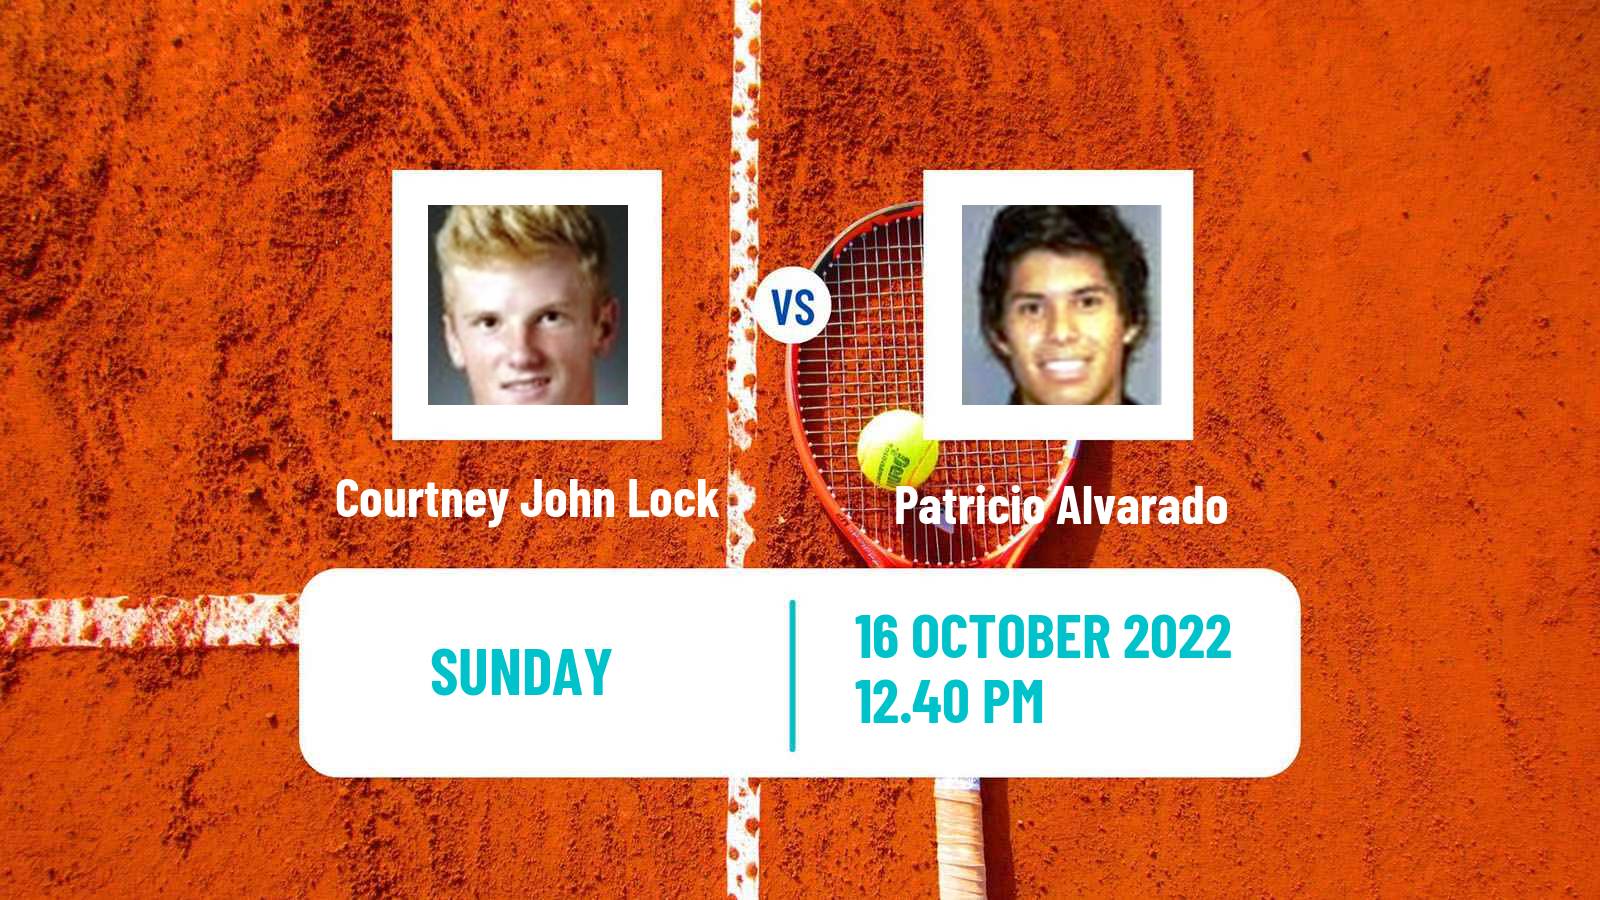 Tennis ATP Challenger Courtney John Lock - Patricio Alvarado